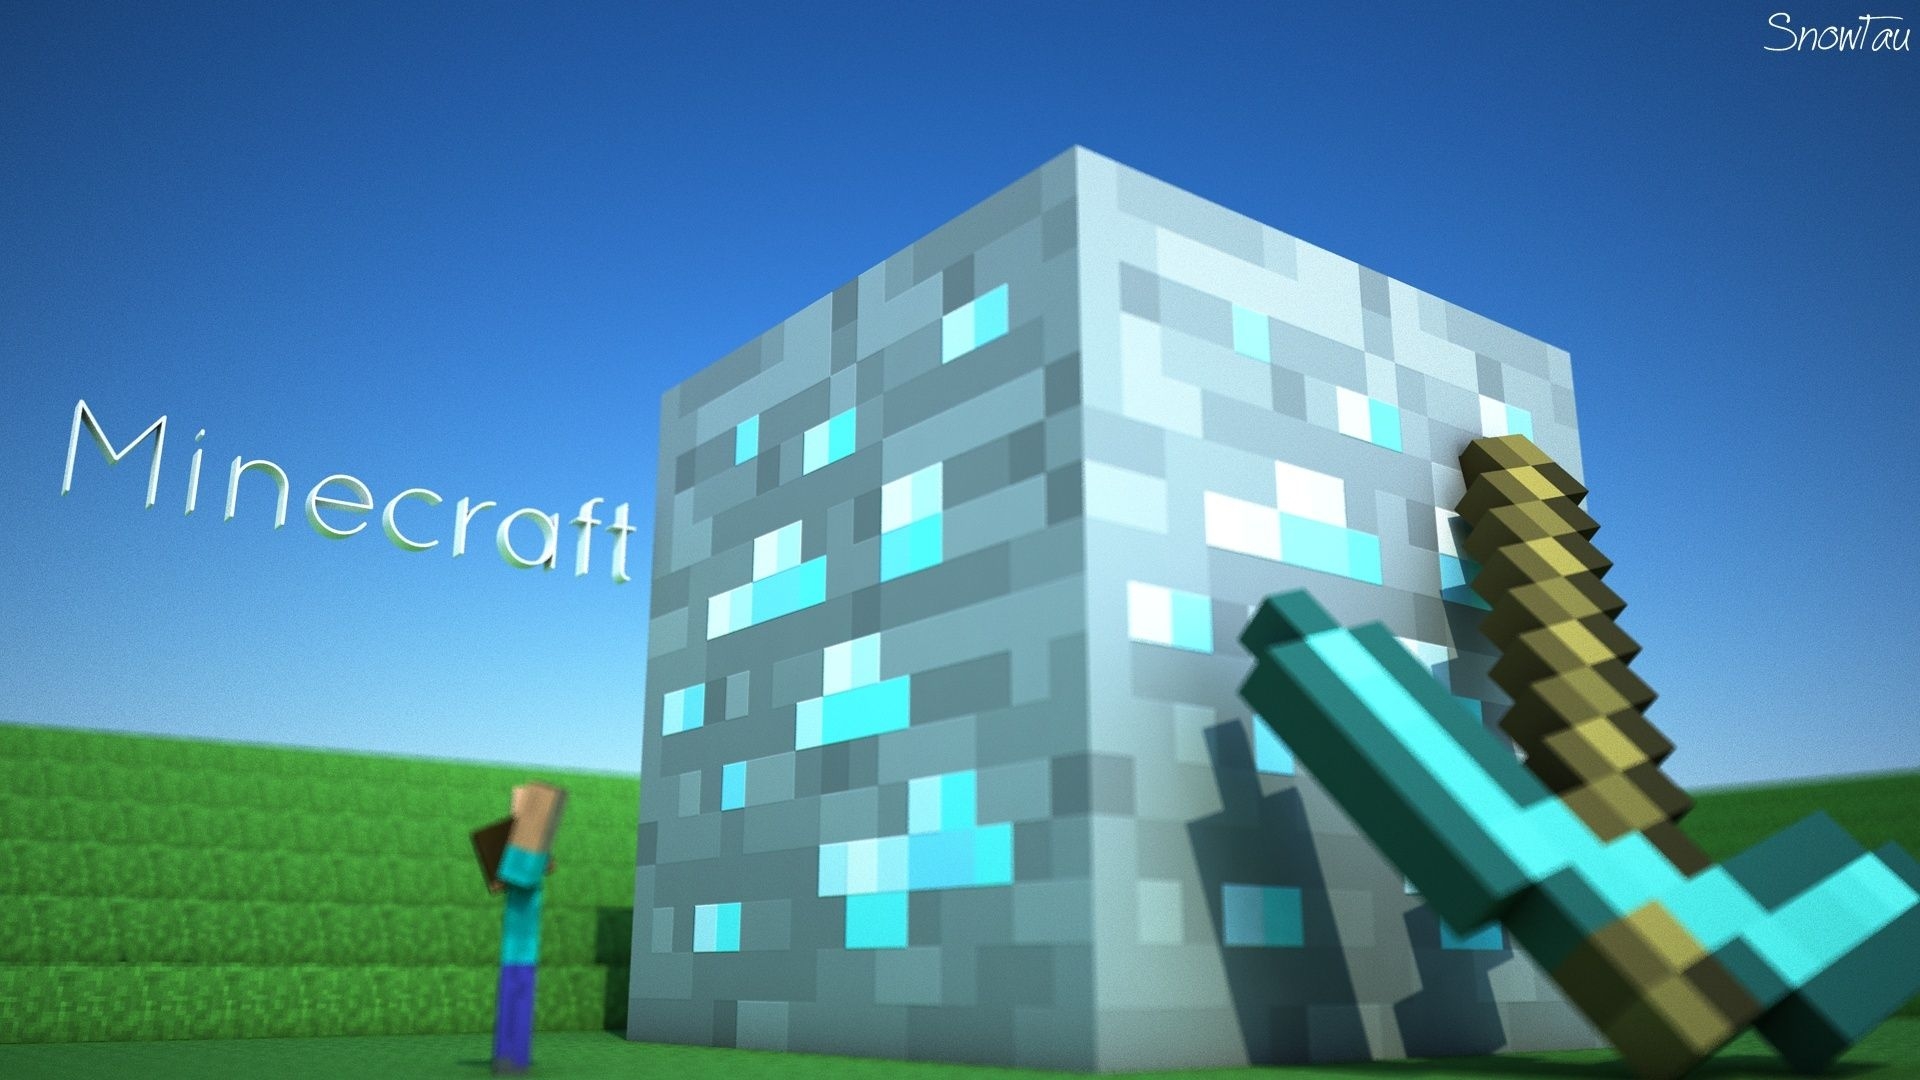 Huge diamond block   Minecraft Wallpaper 1920x1080 69393 1920x1080